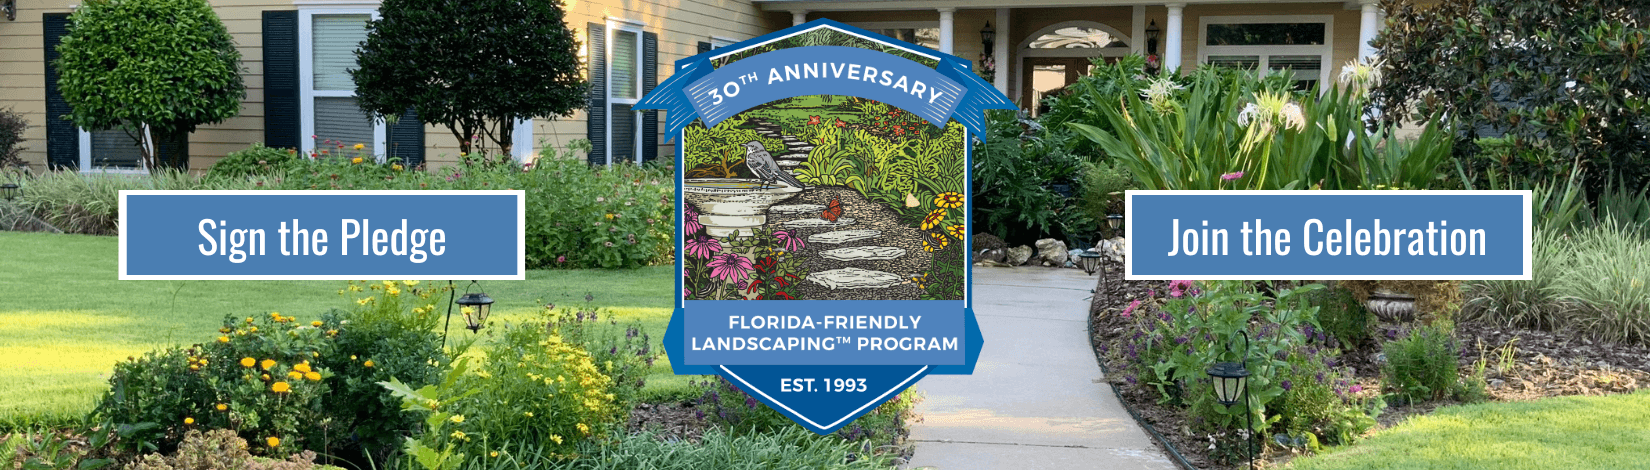 Florida-Friendly Landscaping™ Program - University of Florida